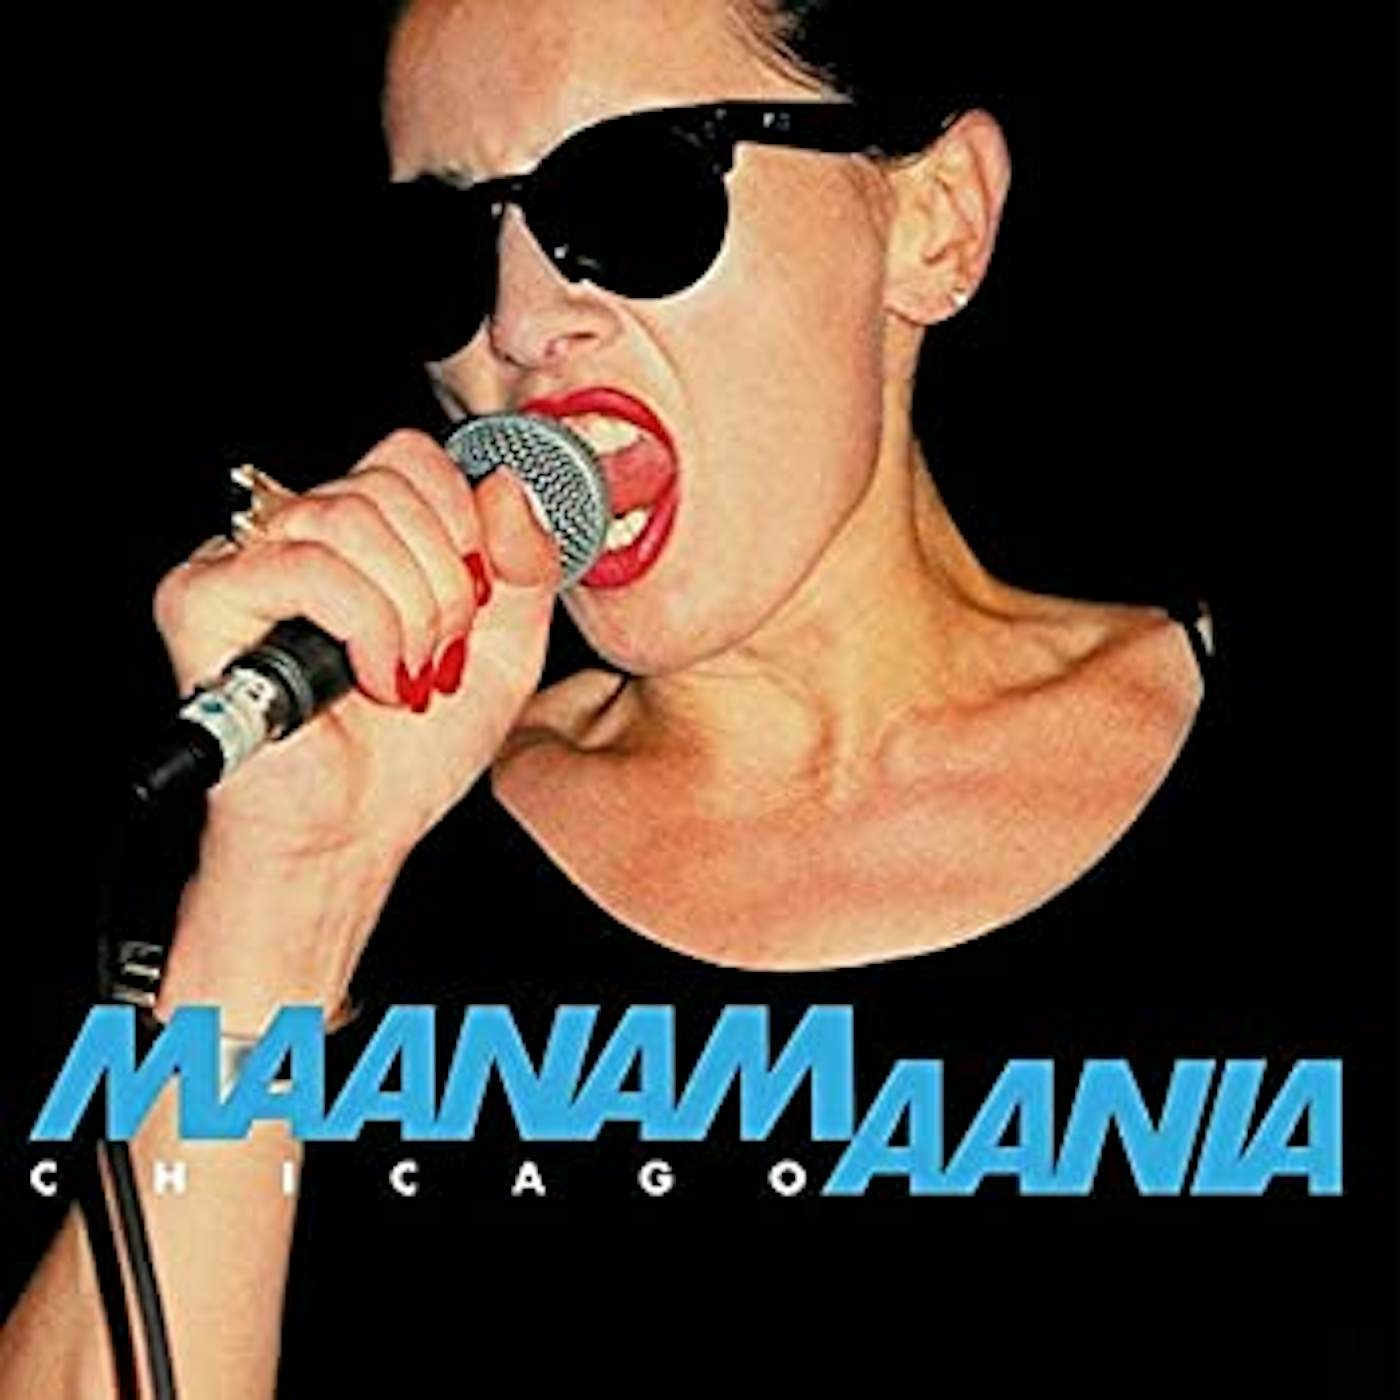 MAANAMAANIA CHICAGO Vinyl Record